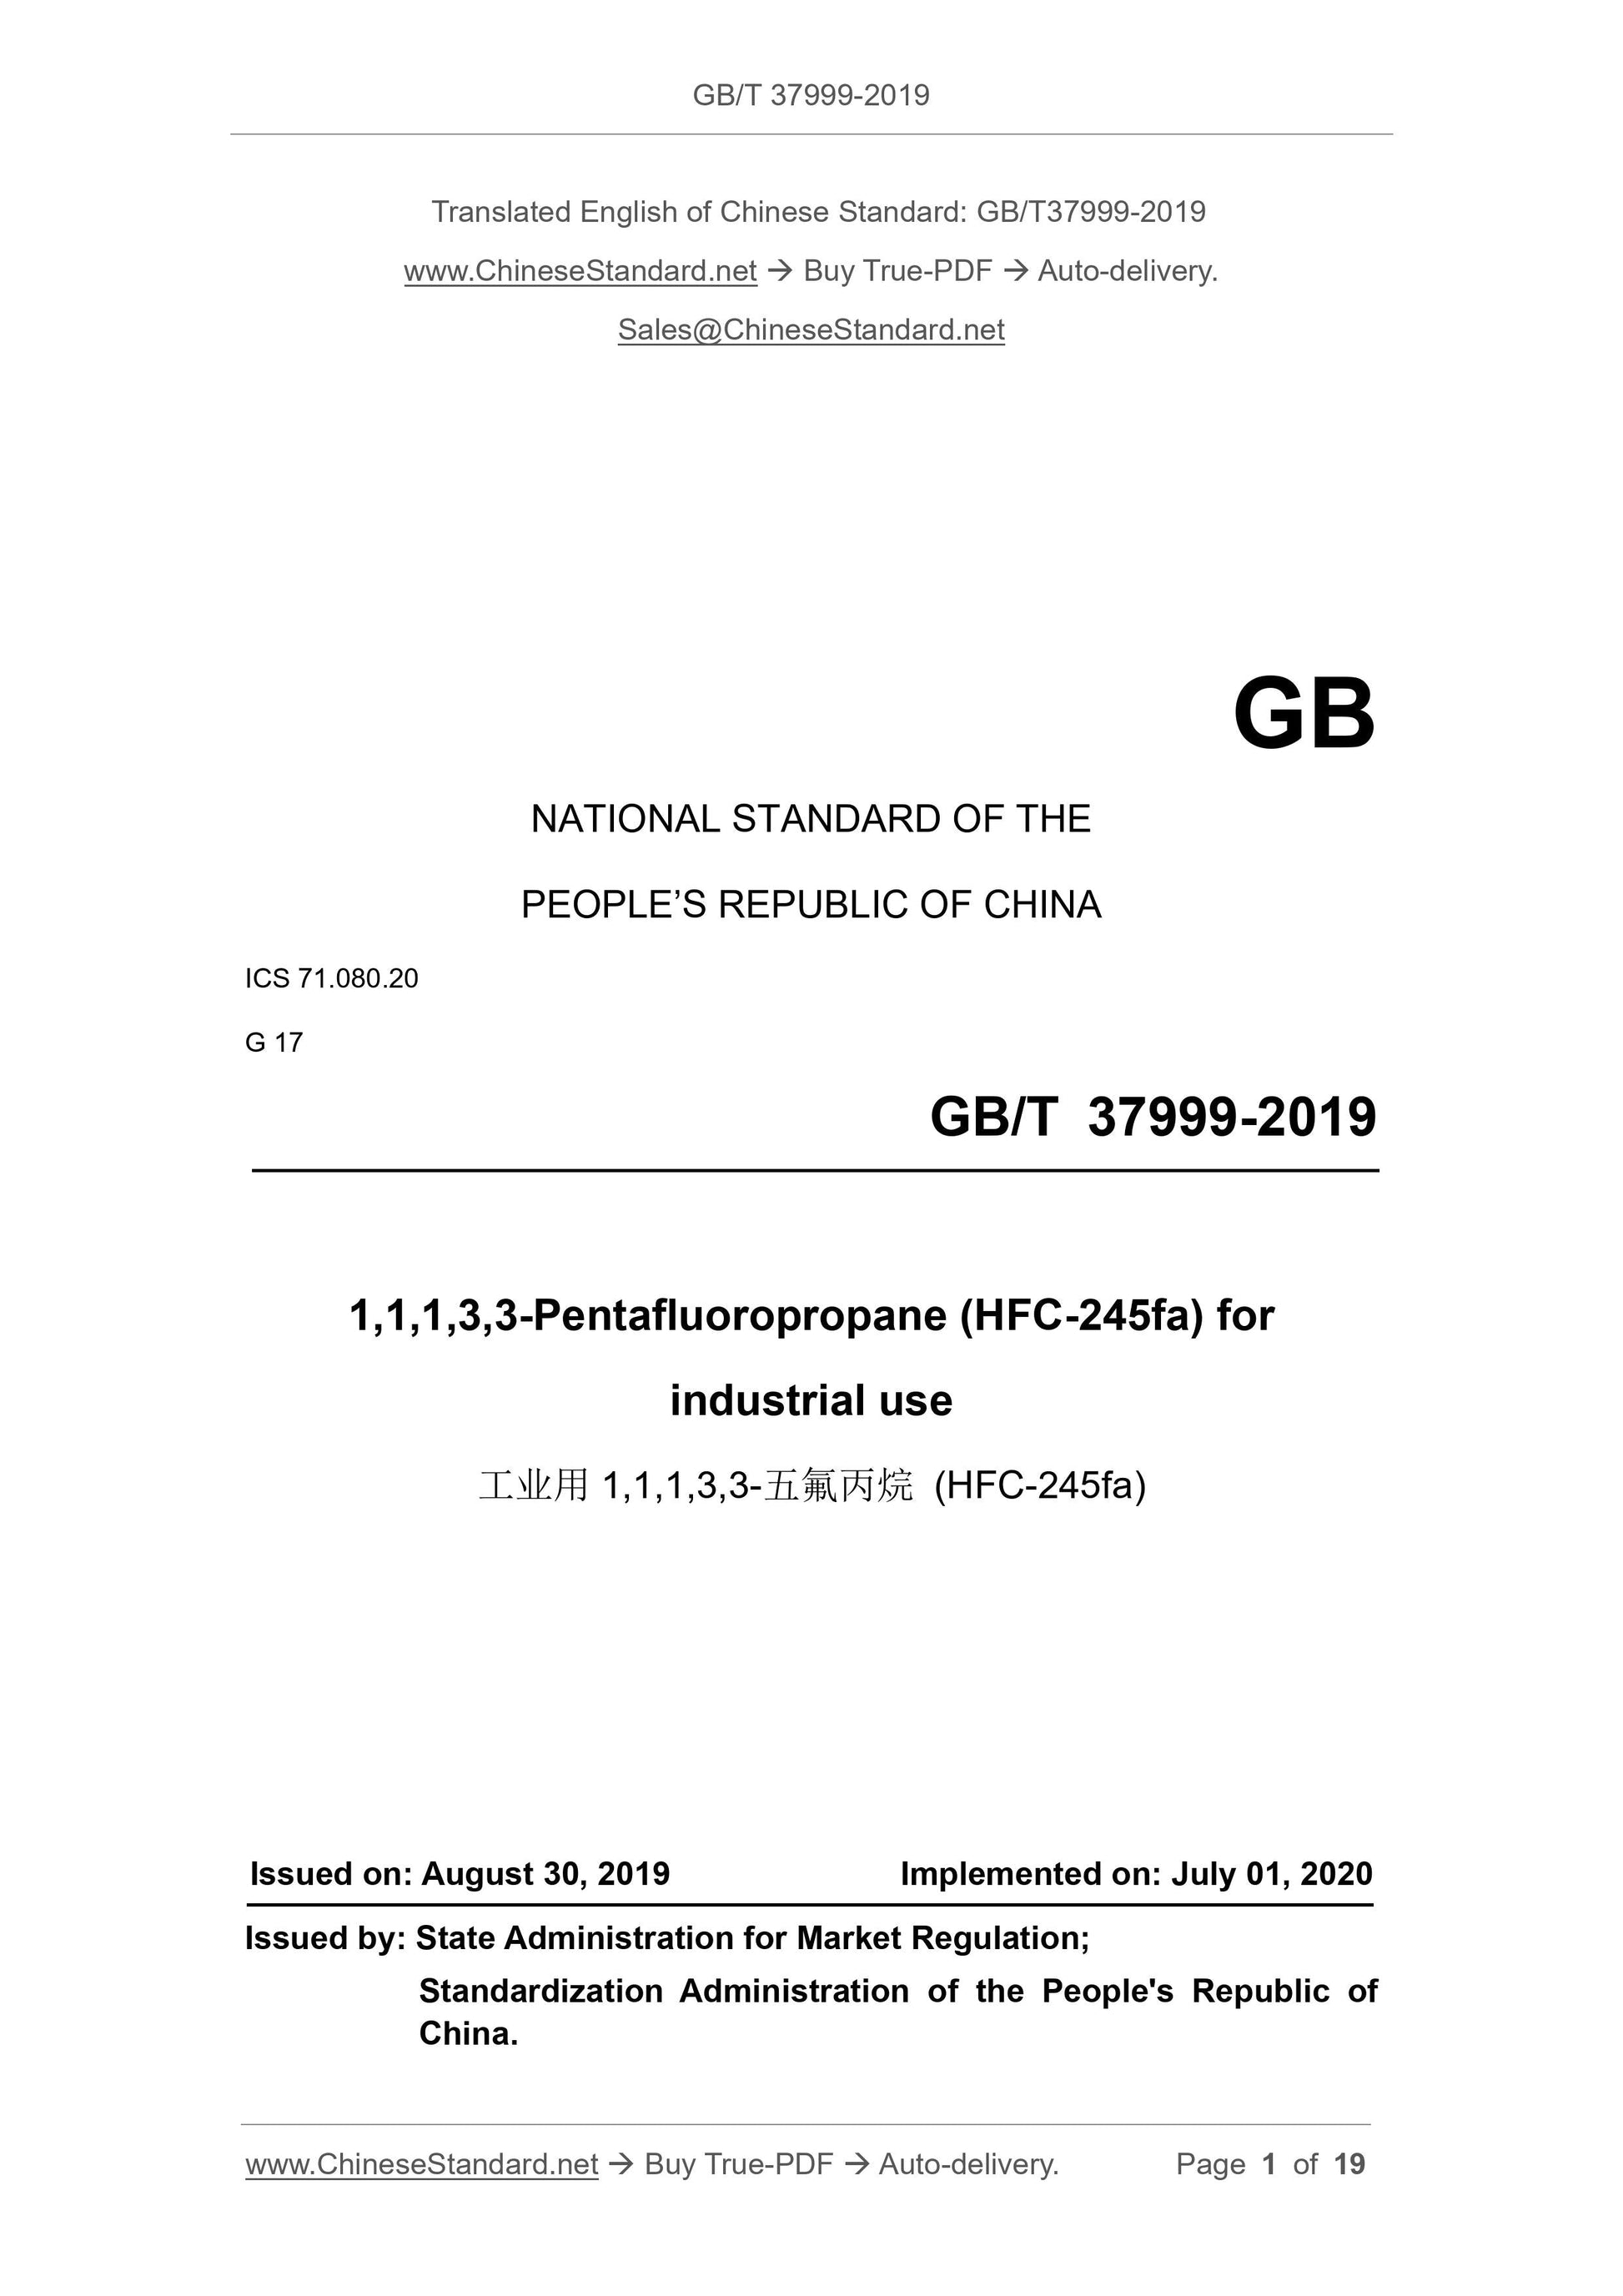 GBT37999-2019 Page 1